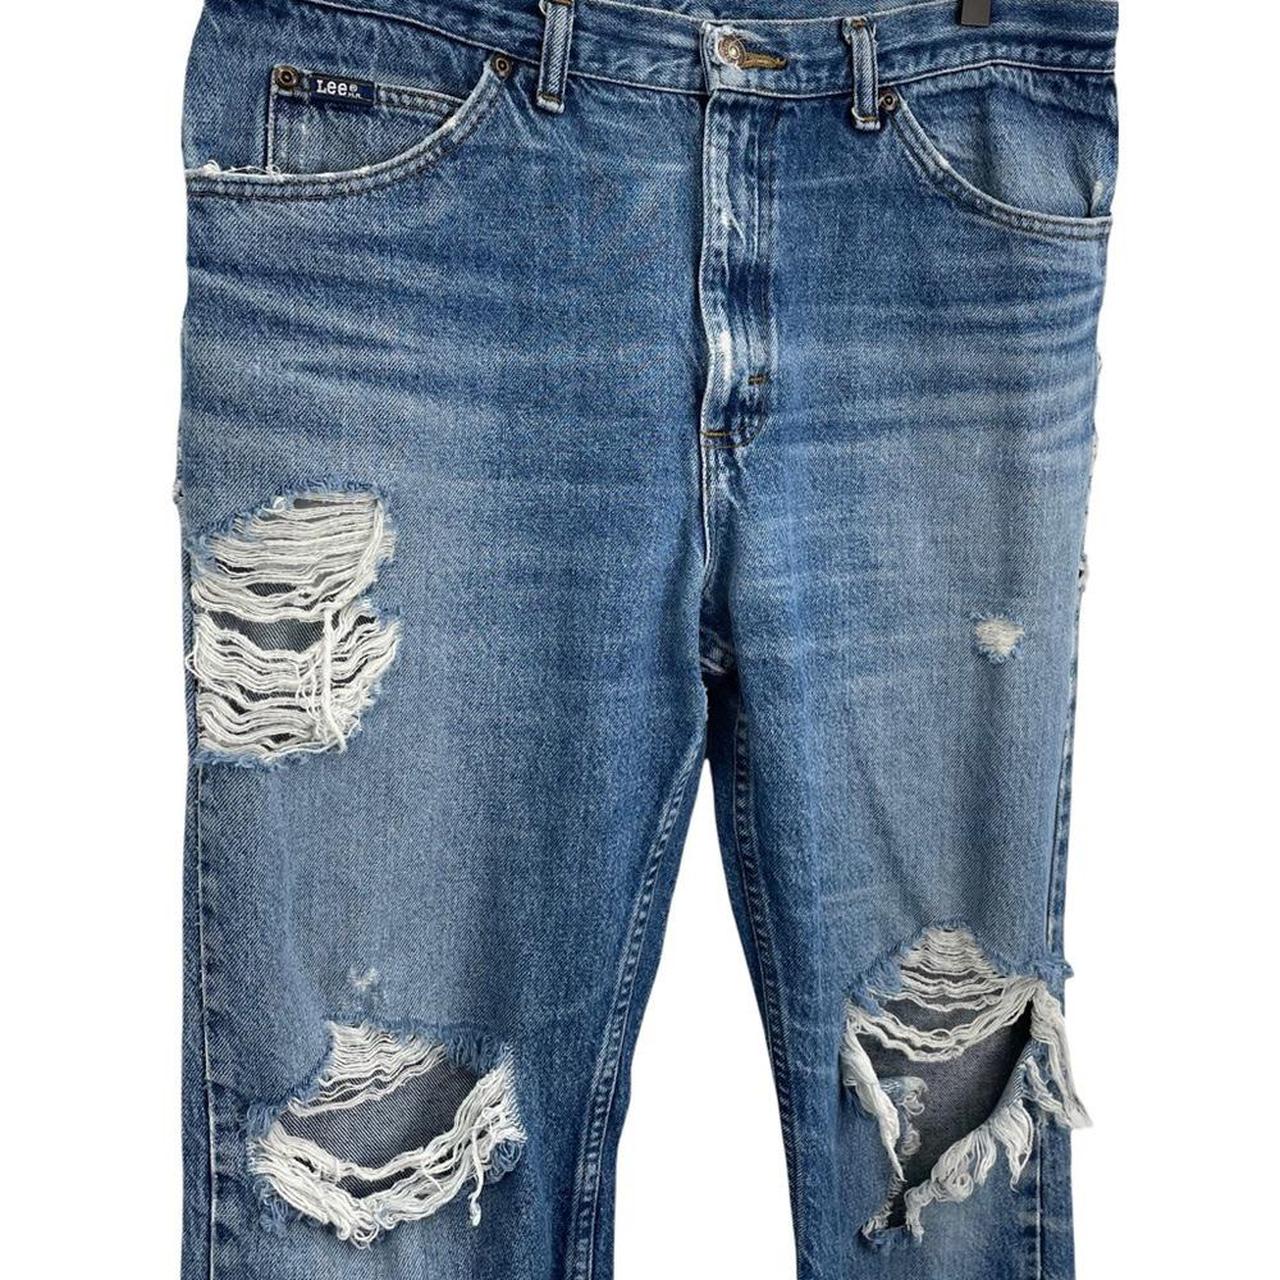 Product Image 2 - Vintage Lee jeans (men’s). 

‼️